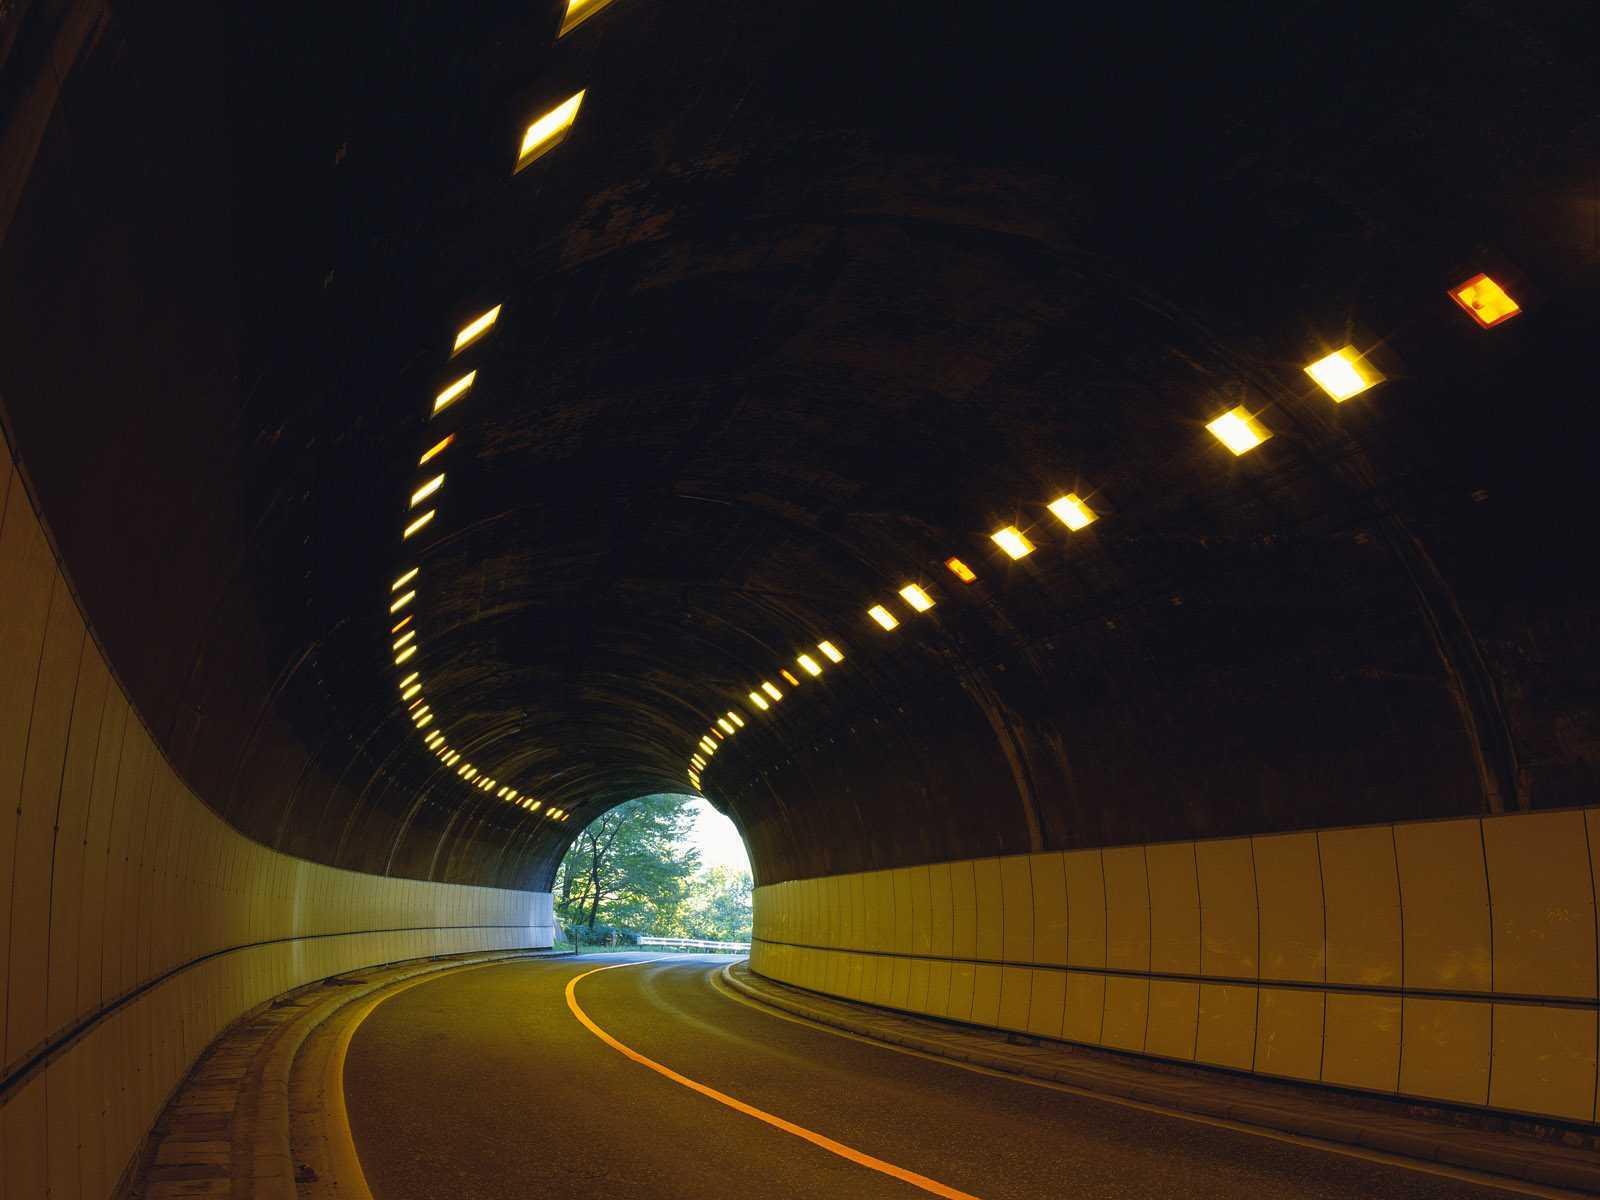 Bosch Zdroj: http://wallpapersnation.com/beautiful-tunnel-scenery/beautifultunnel-scenery/ Děkuji za pozornost!